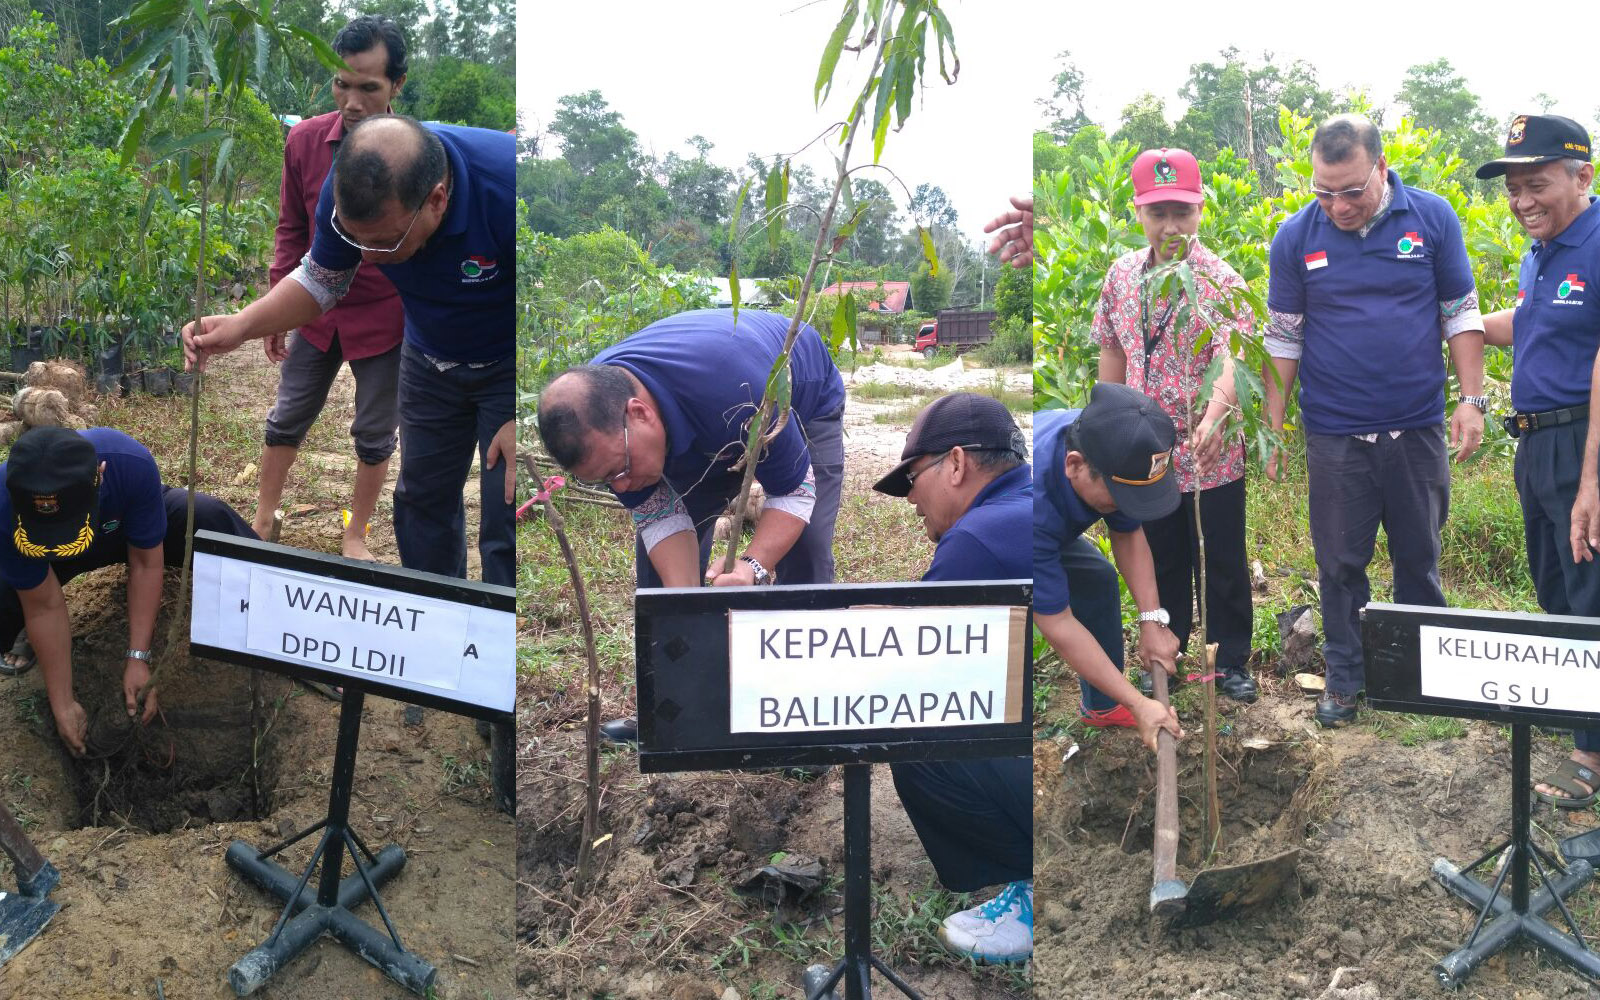 Kepala DLH Balikpapan Suryanto menanam pohon diikuti dewan penasehat dan pengurus DPD LDII Balikpapan, bersama lurah dan RT setempat, sebagai bentuk dan komitmen bersama menjaga lingkungan dan kebersihan sekitar, Jumat (14/7). Foto: Zain LINES